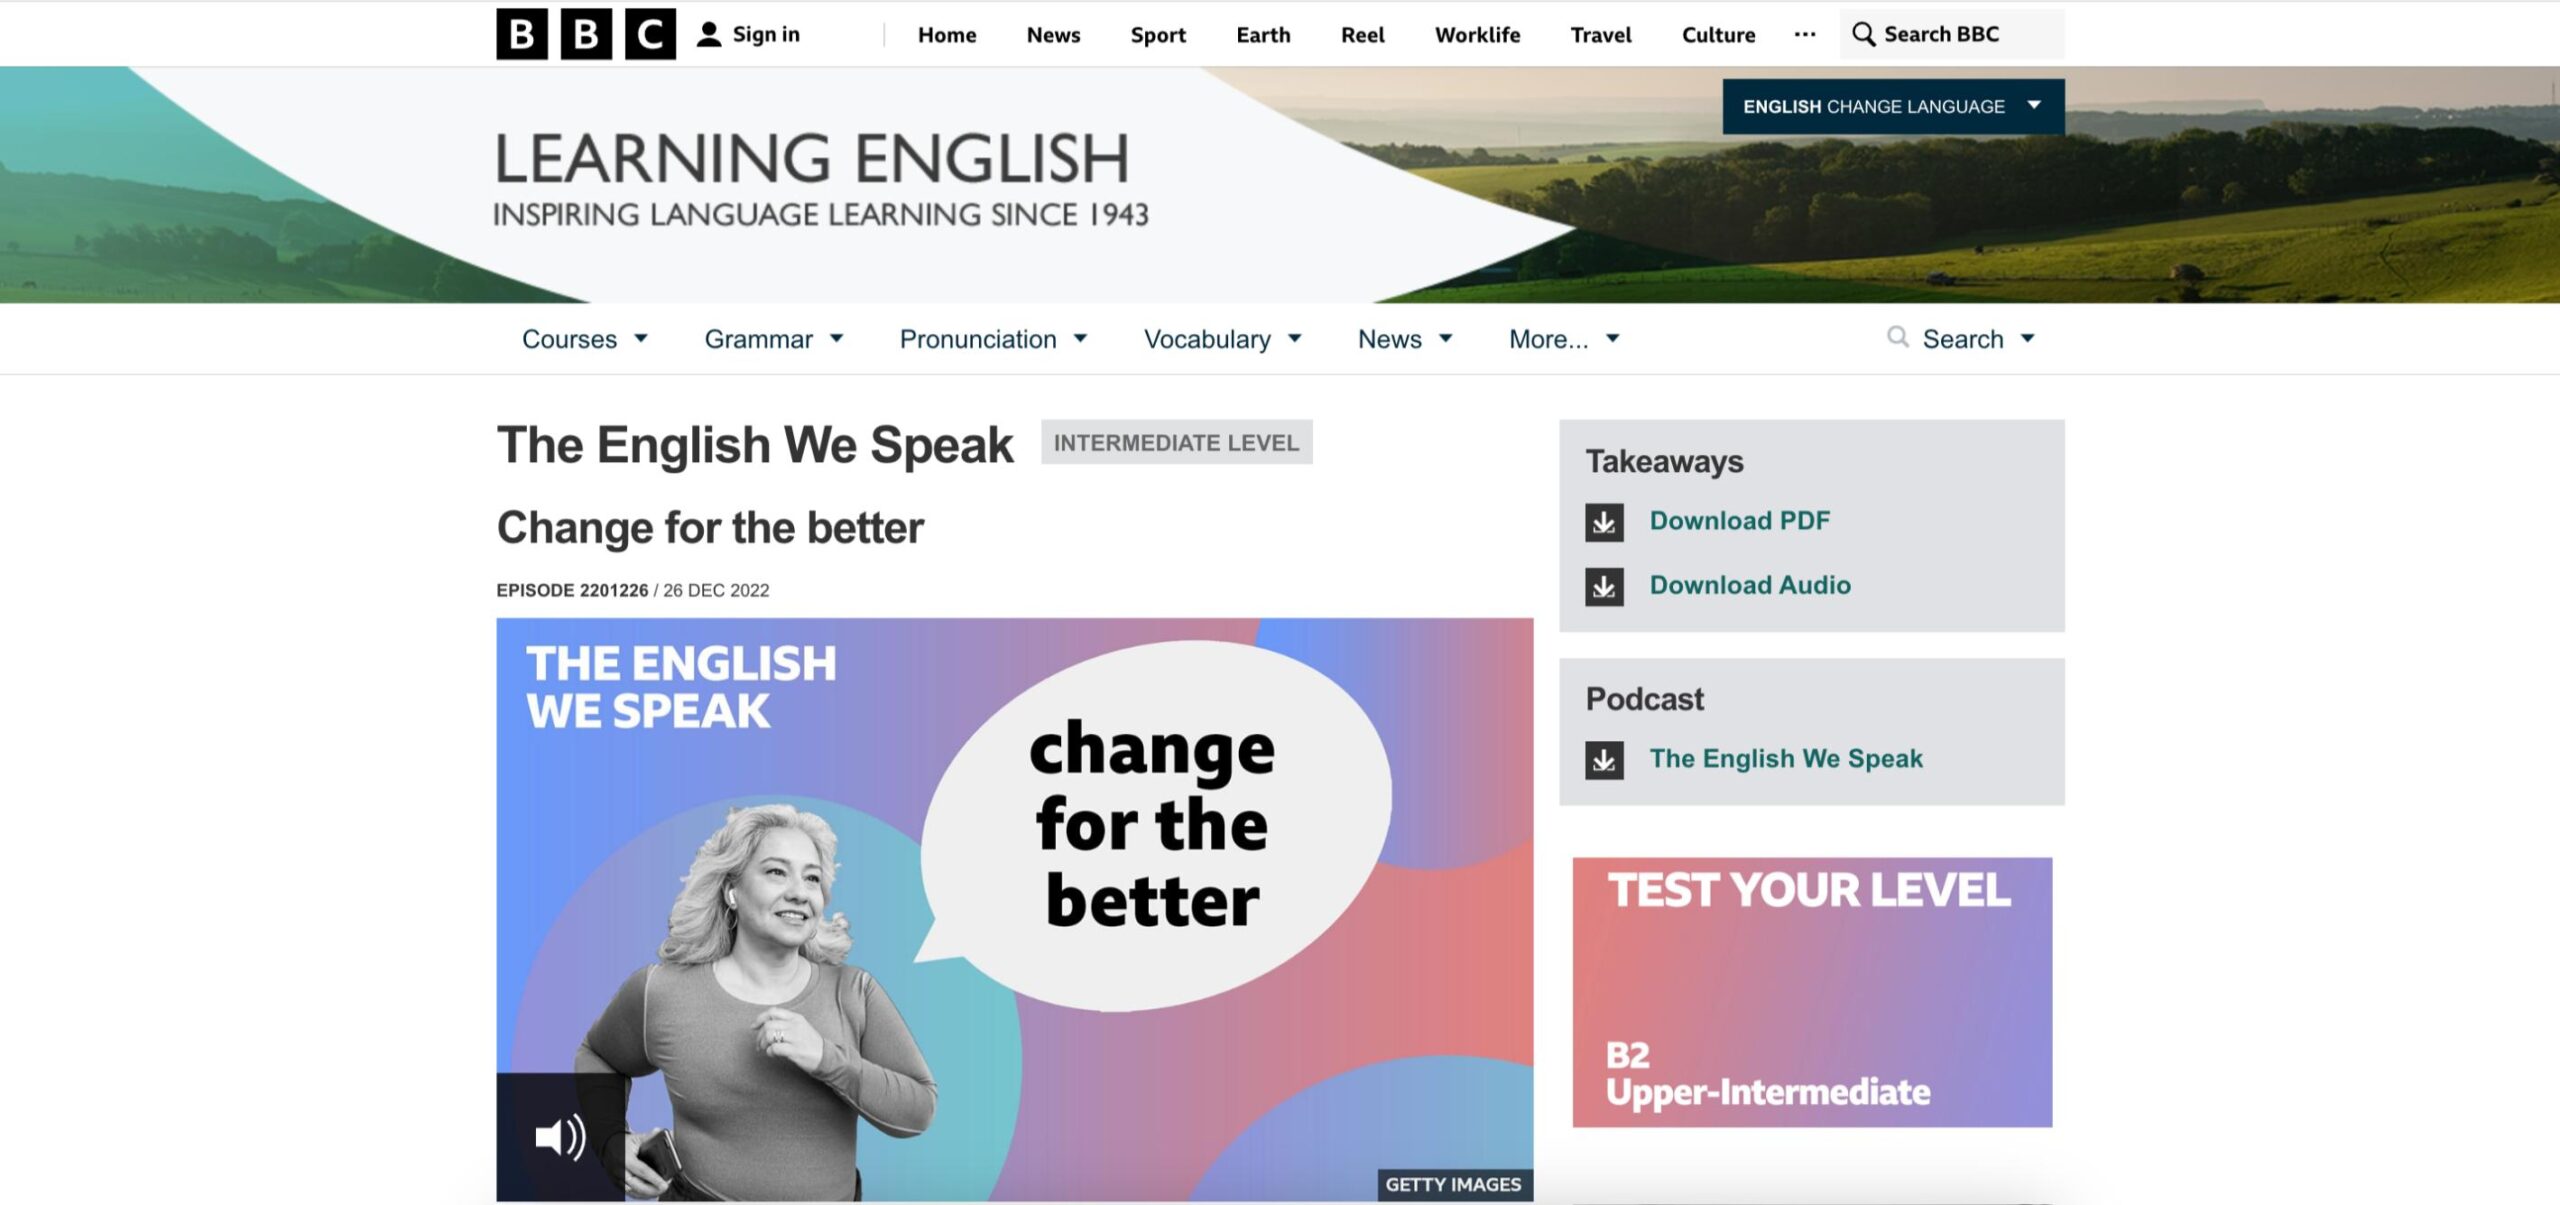 The English We speak | BBC